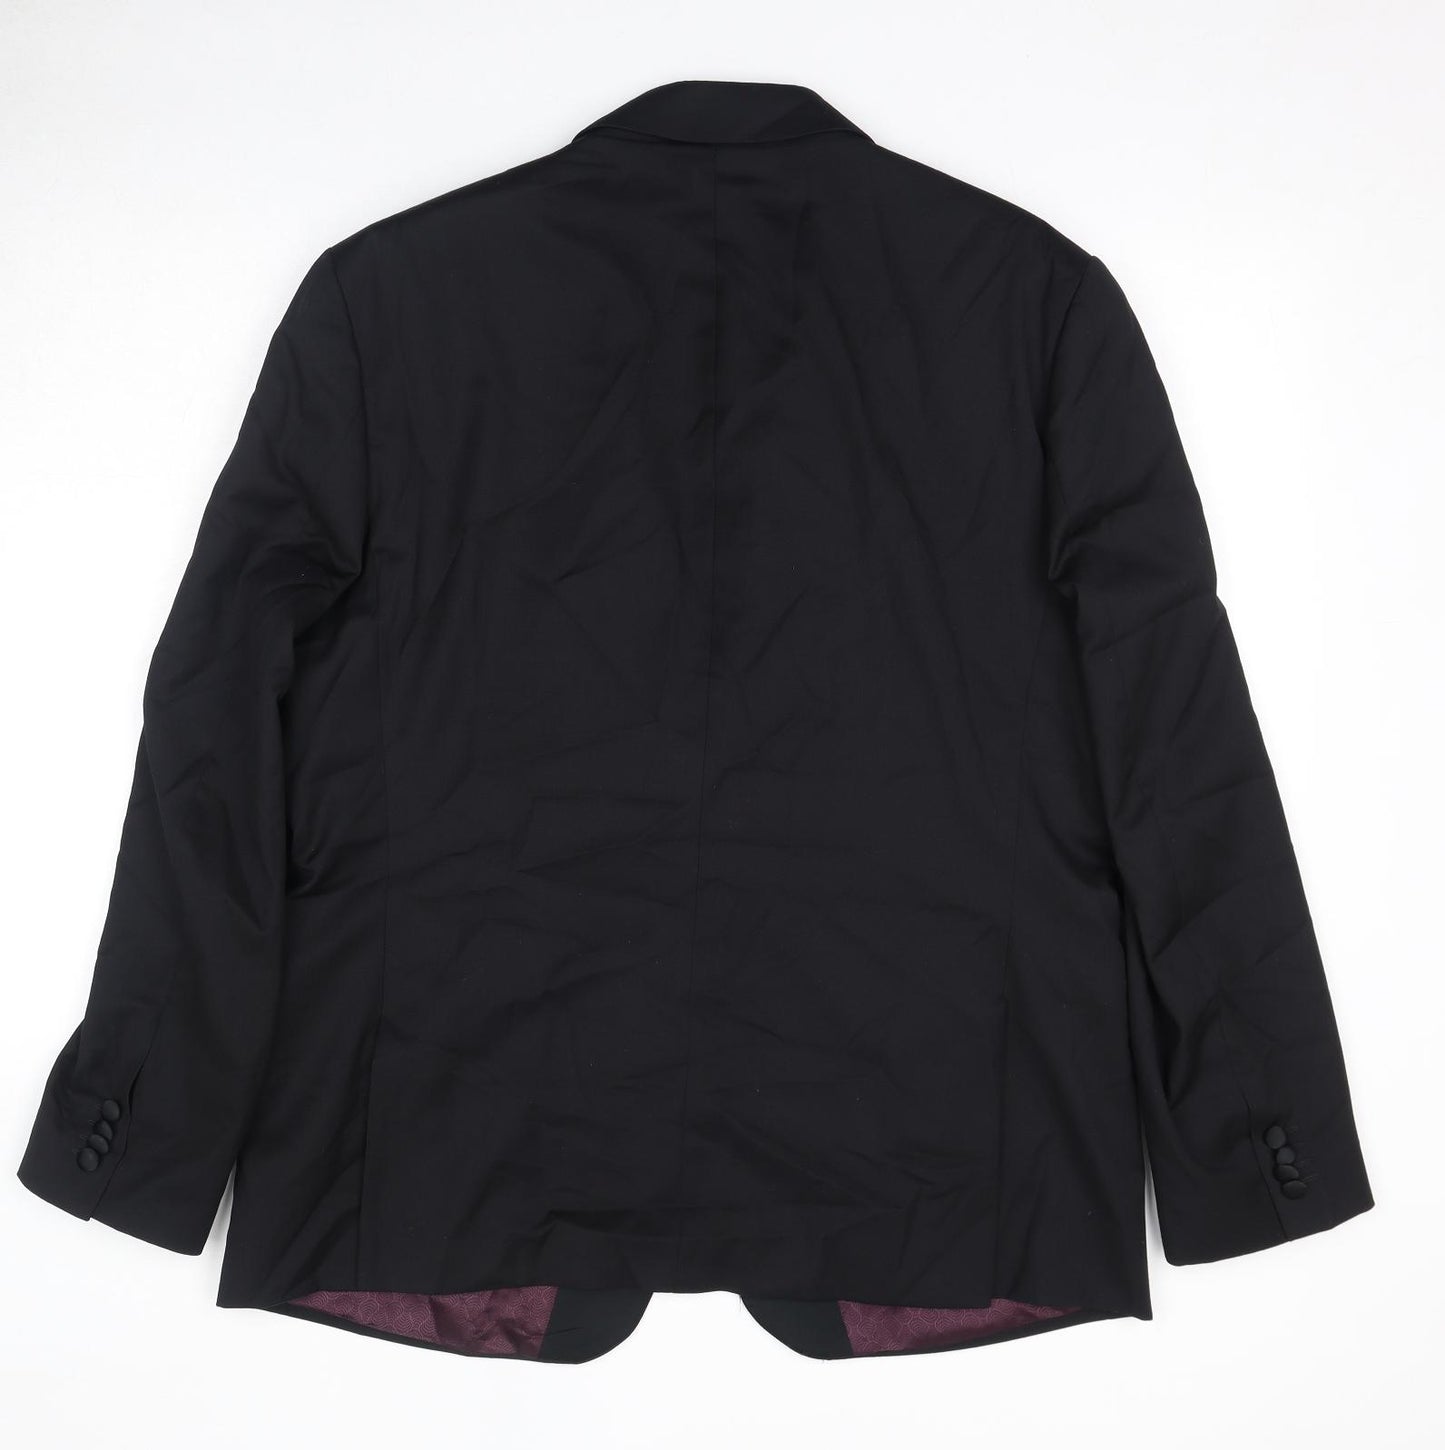 ALEXANDRE OF ENGLAND Mens Black Wool Jacket Suit Jacket Size 46 Regular